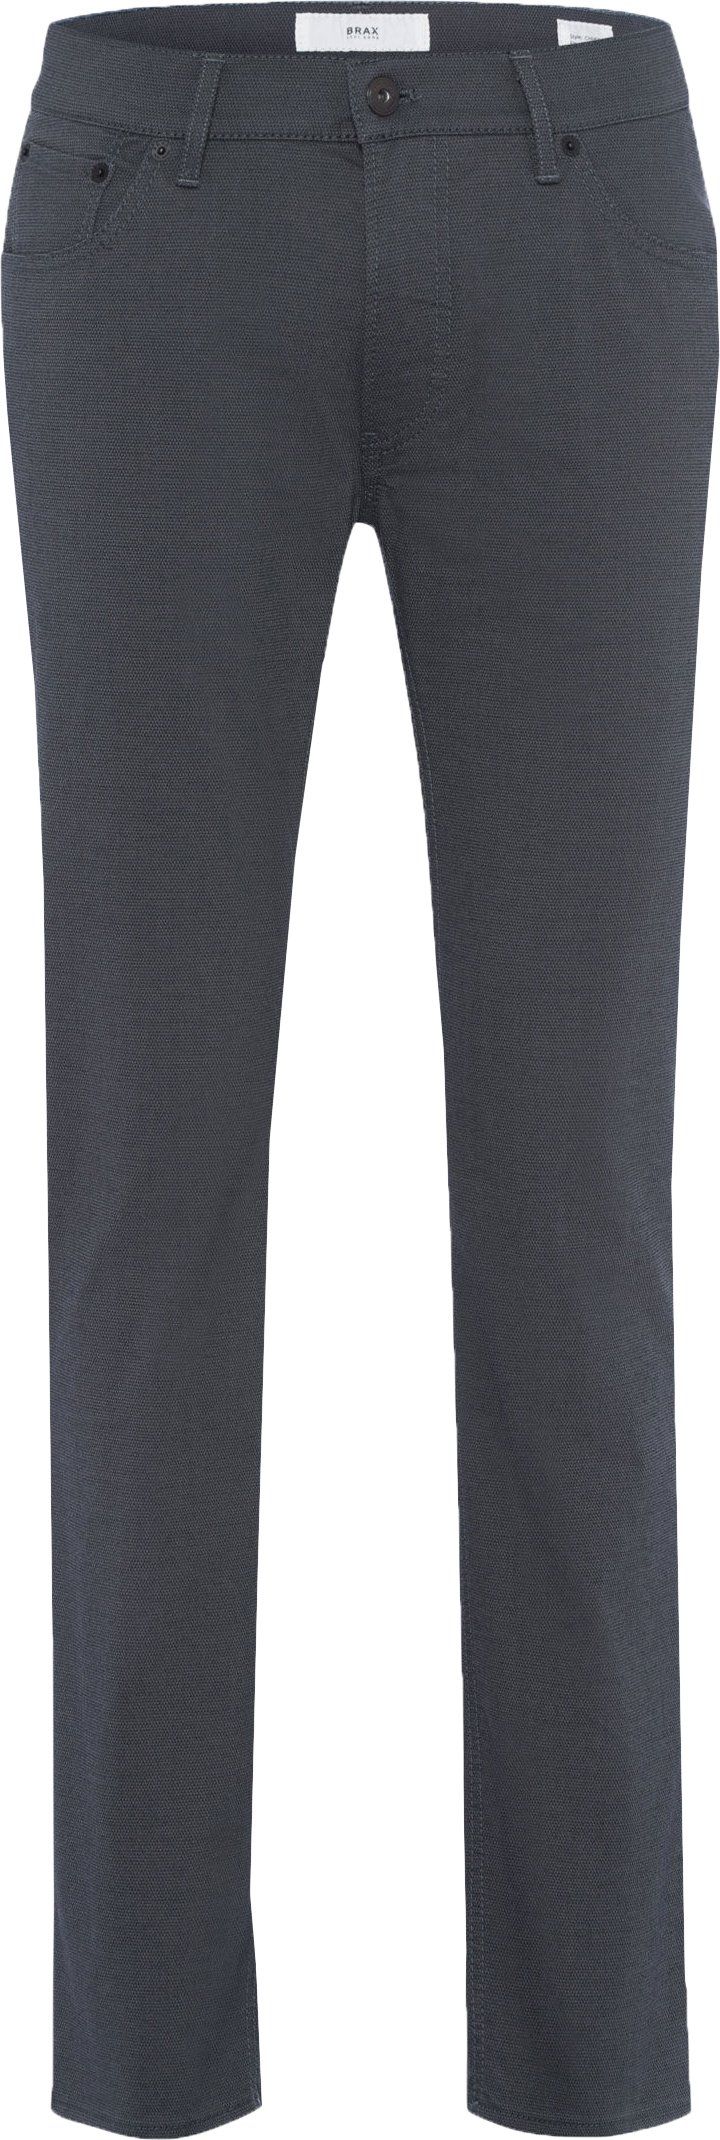 Brax Chuck Hi Flex Modern Fit Jeans Dark Gray Dark Grey Grey size W 31